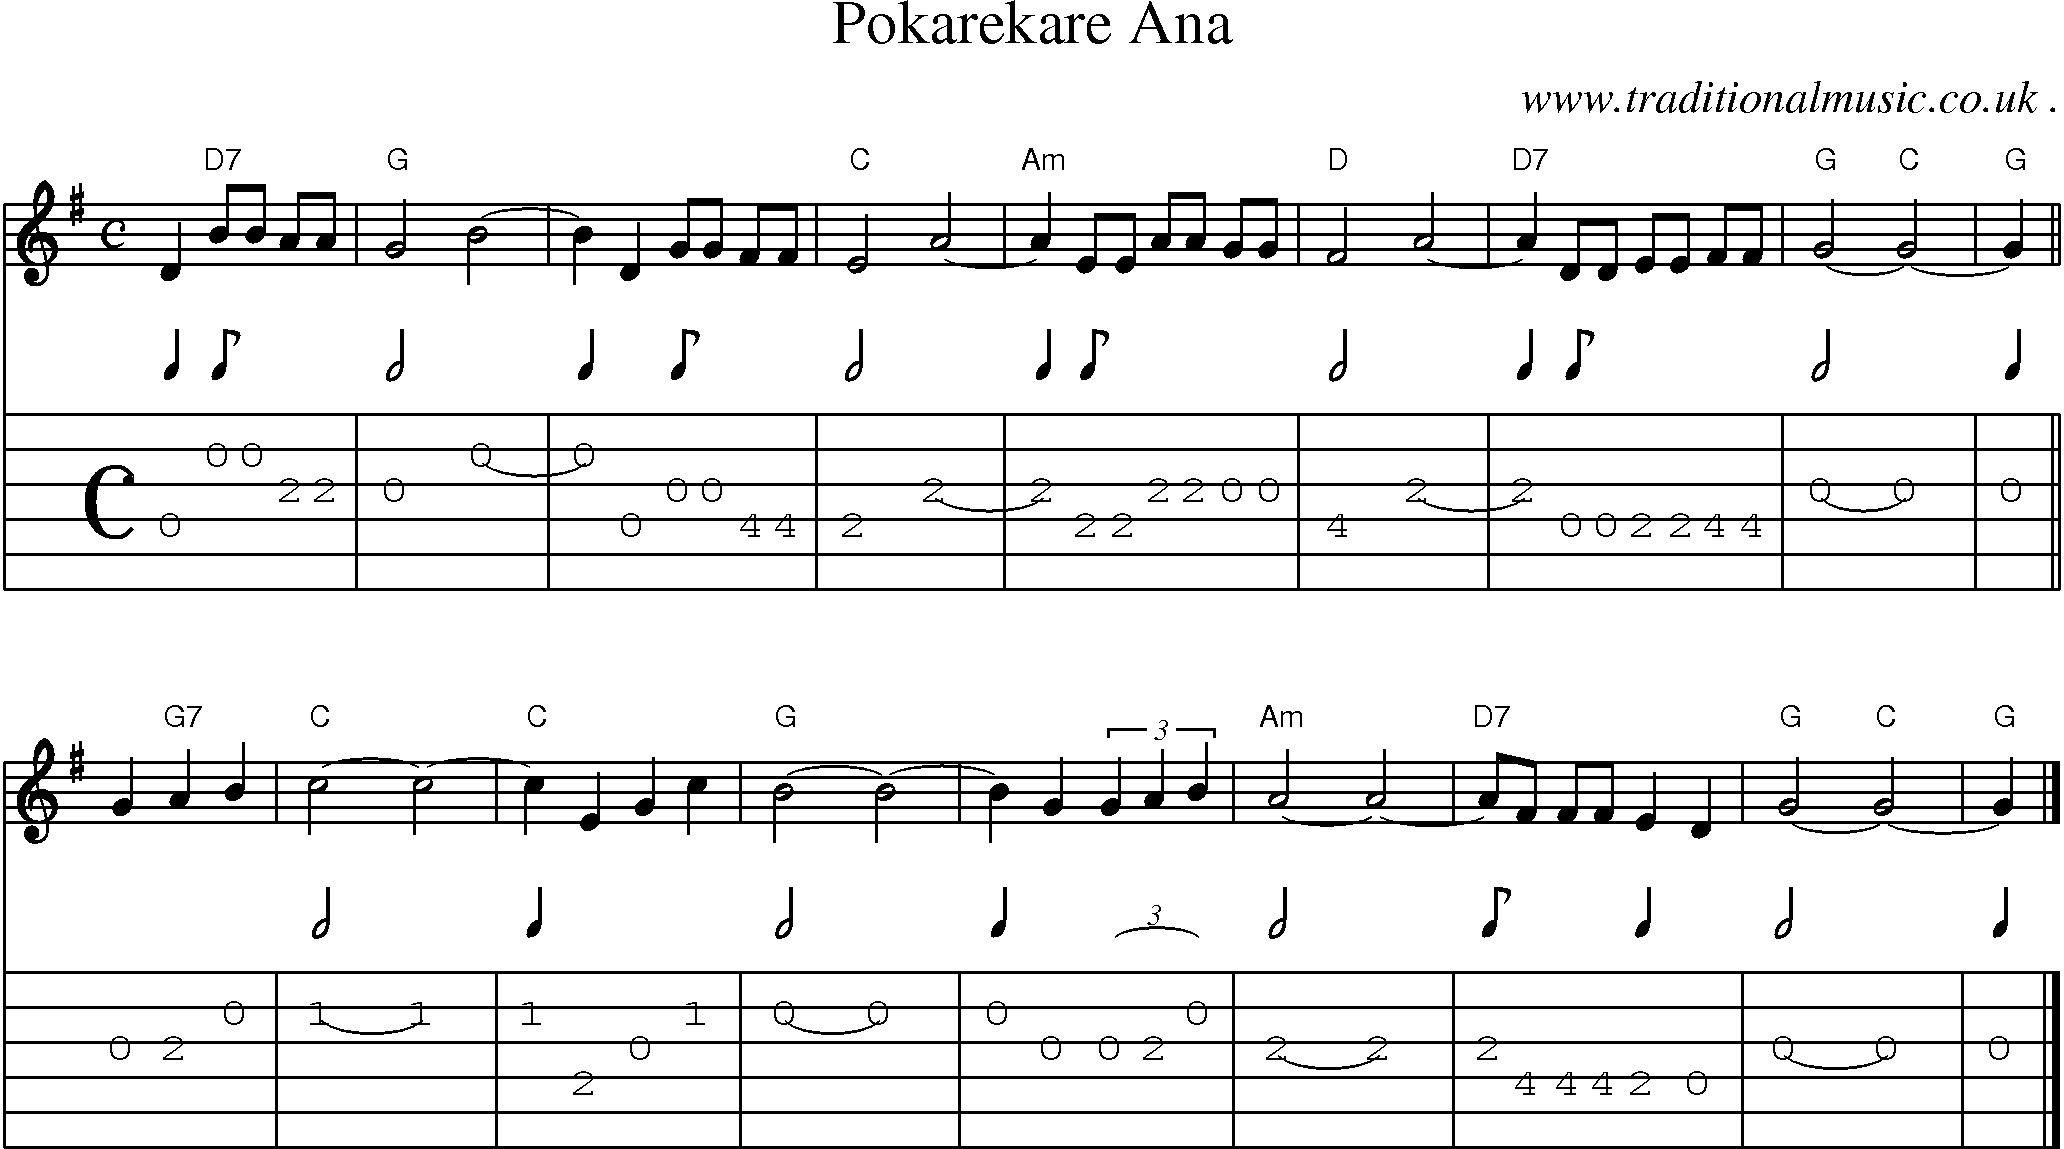 Sheet-music  score, Chords and Guitar Tabs for Pokarekare Ana